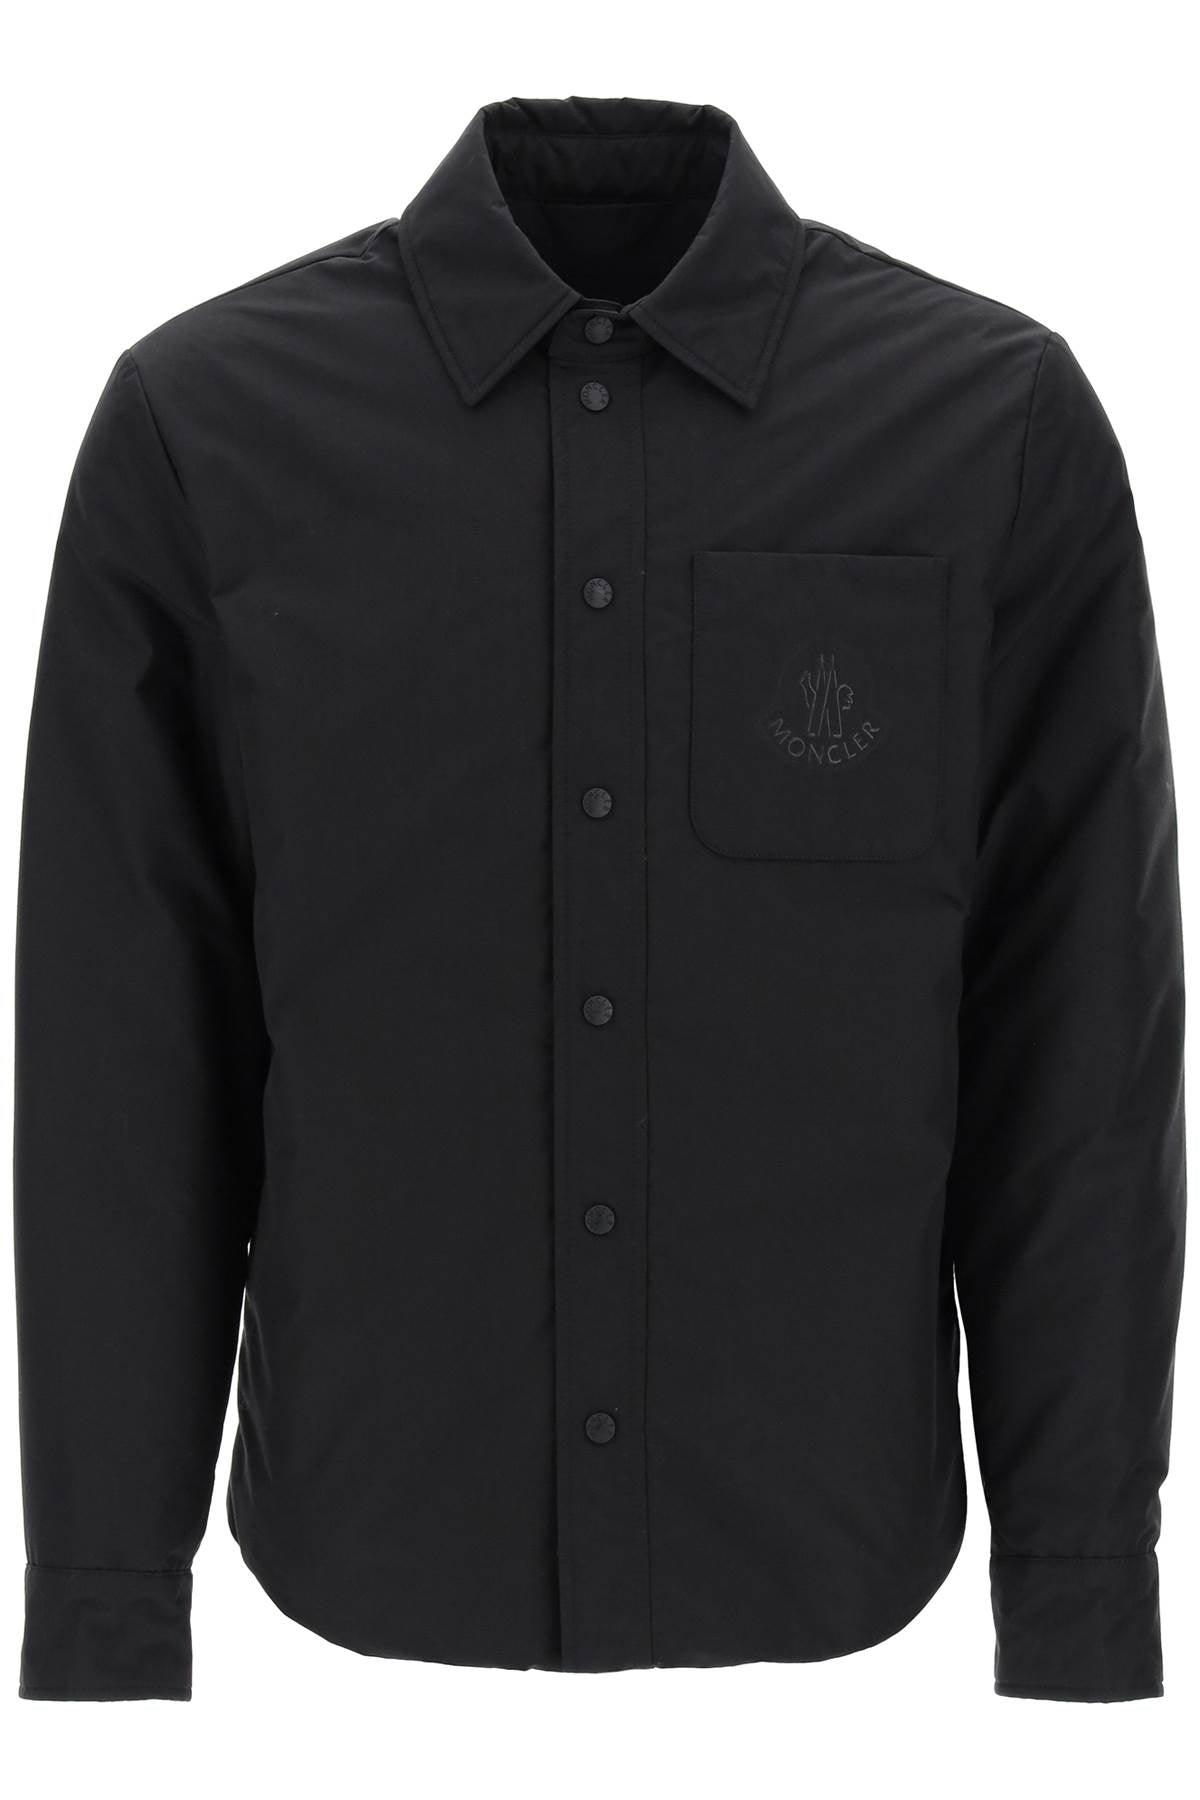 Moncler overshirt-style down jacket - JOHN JULIA